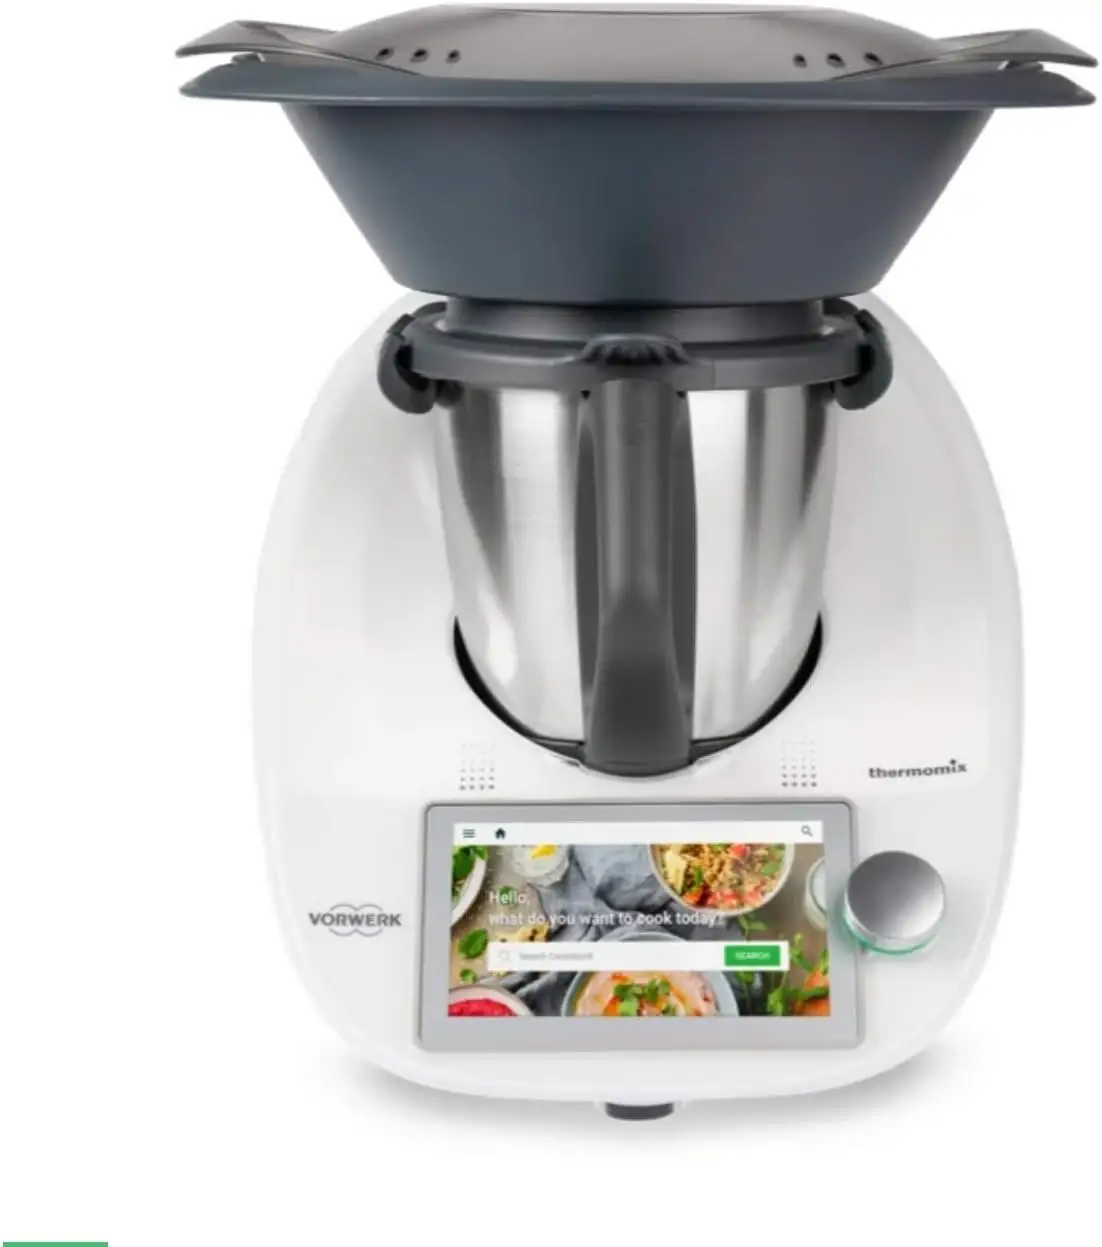 Prodotto di vendita caldo nuovo Thermo_mixer tm6 tm5 vorwerk soup maker blender thermal cooker robot cuisine